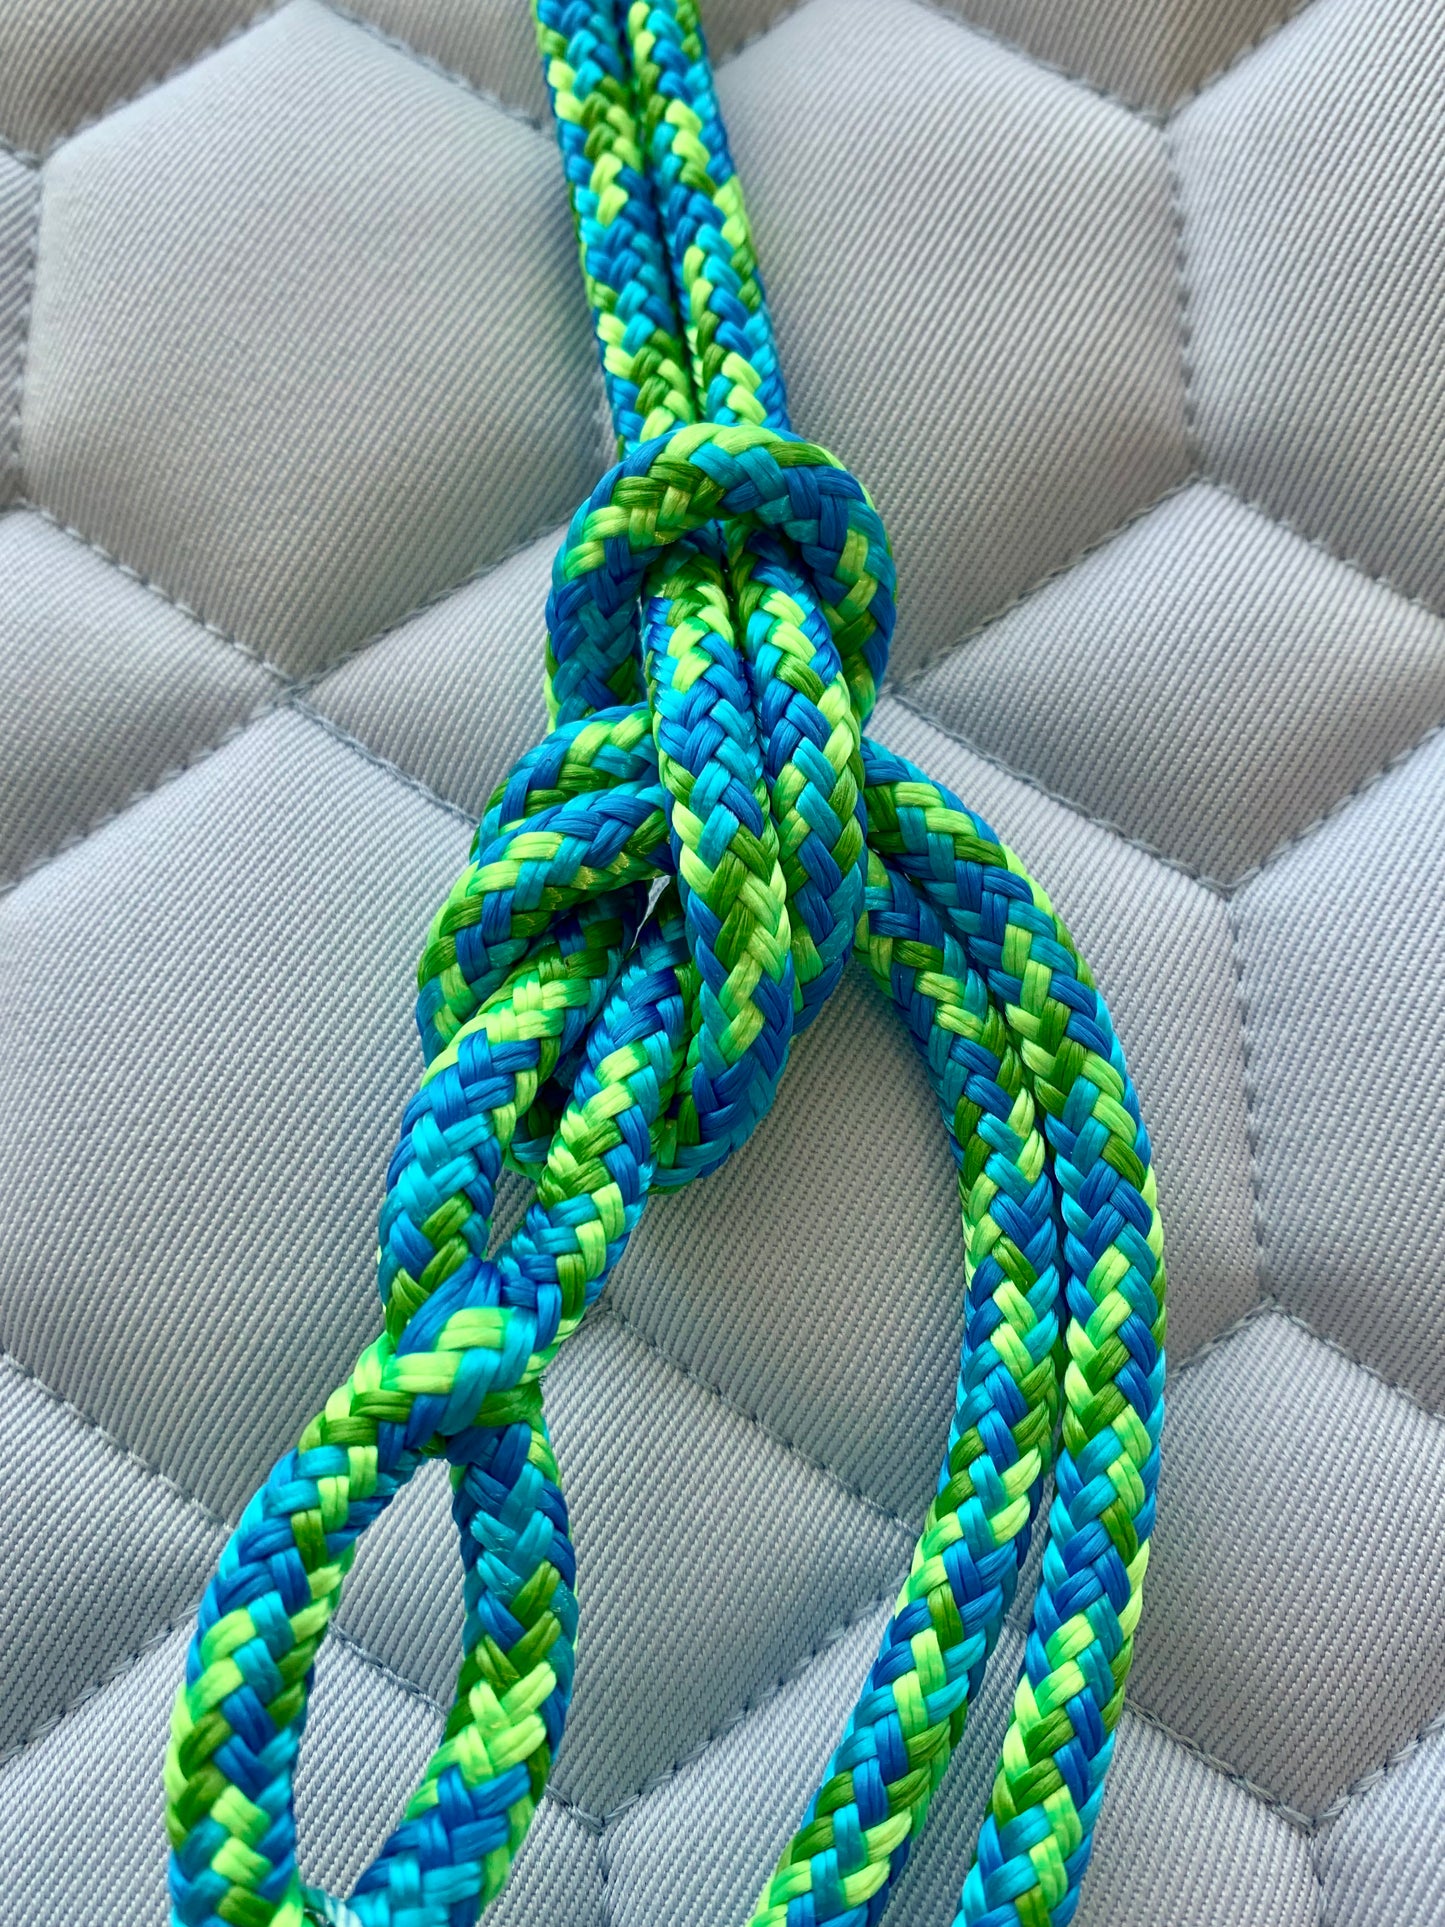 4 Knot Rope Halter - "IGUANA" (6mm)